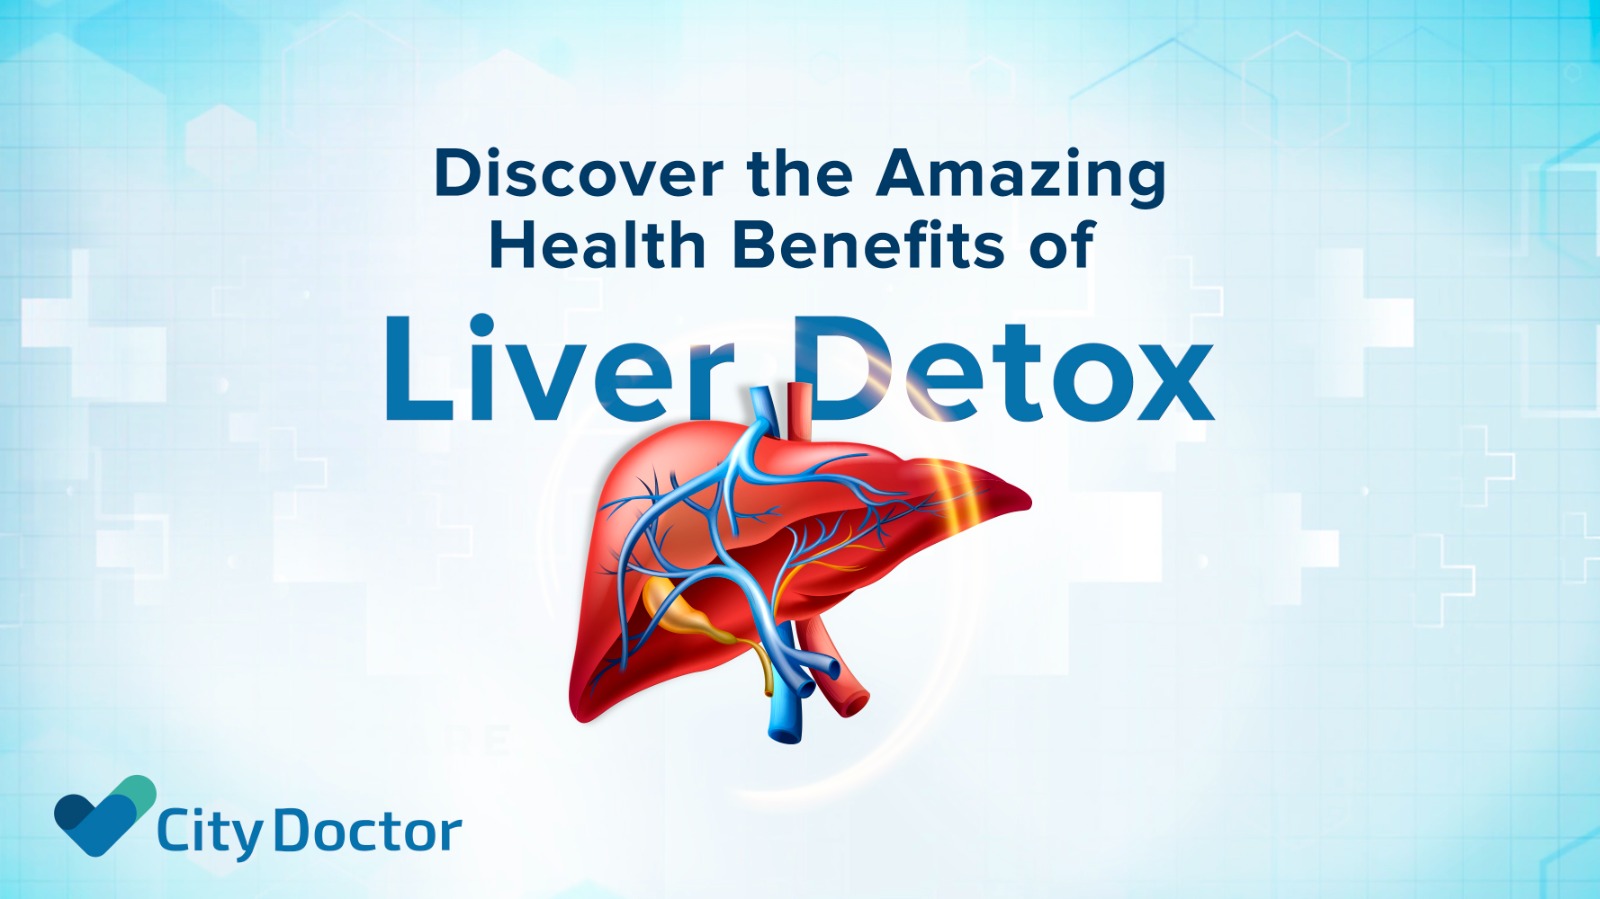 Liver detoxification benefits